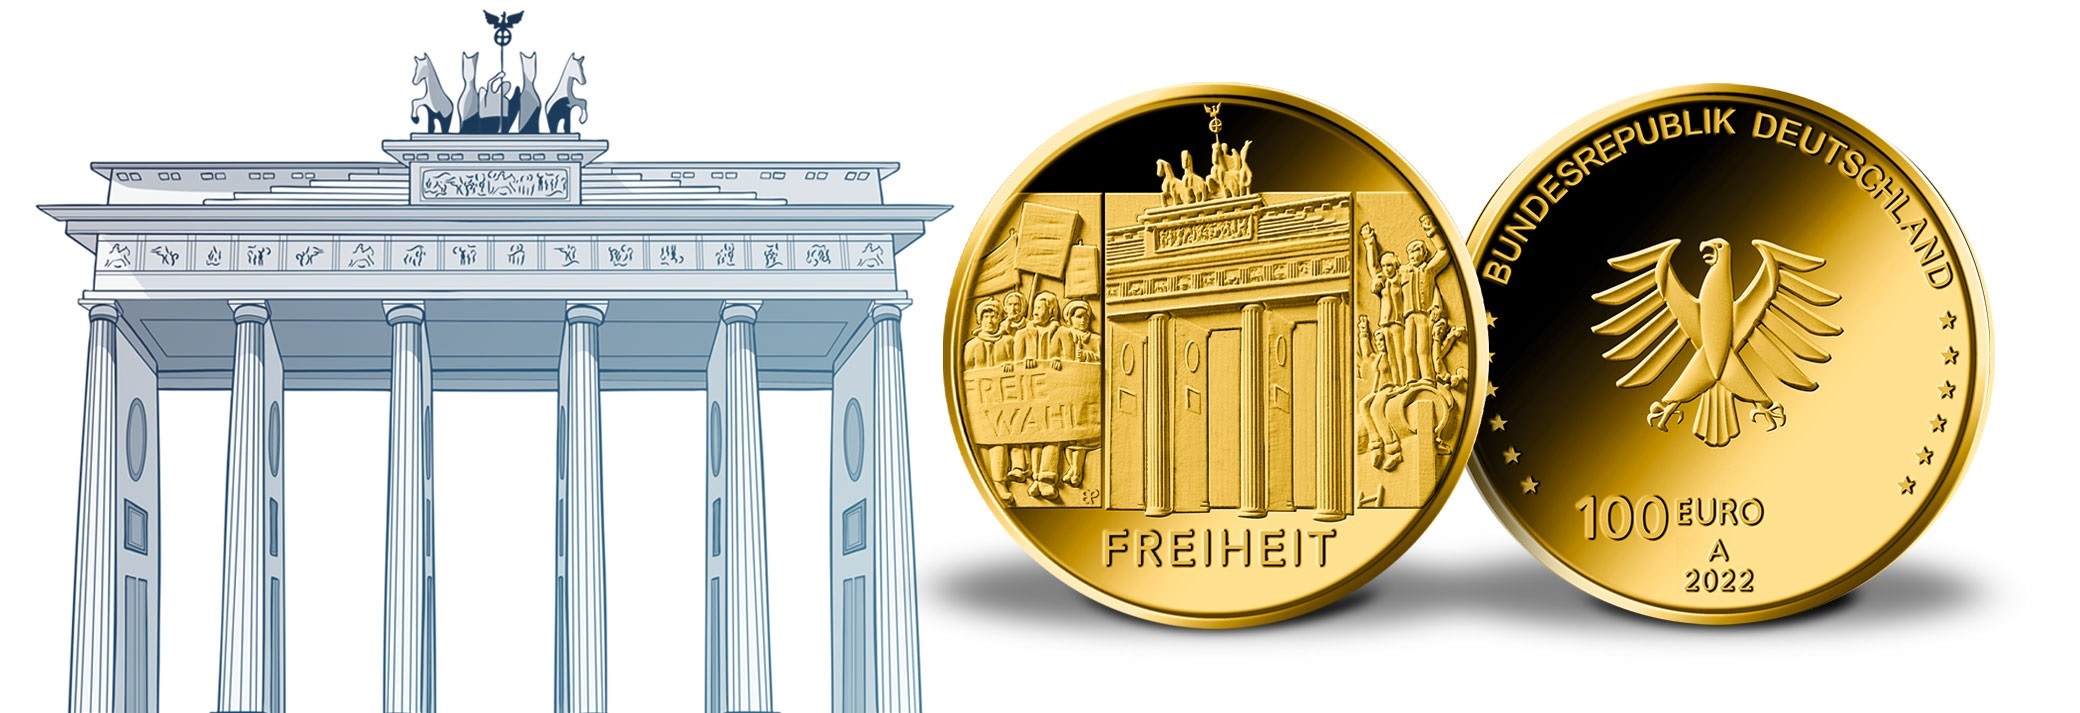 (EUR03.Proof.2022.SGM2201M41S5) 100 € Germany 2022 A BU gold - Liberty (blog illustration) (zoom)